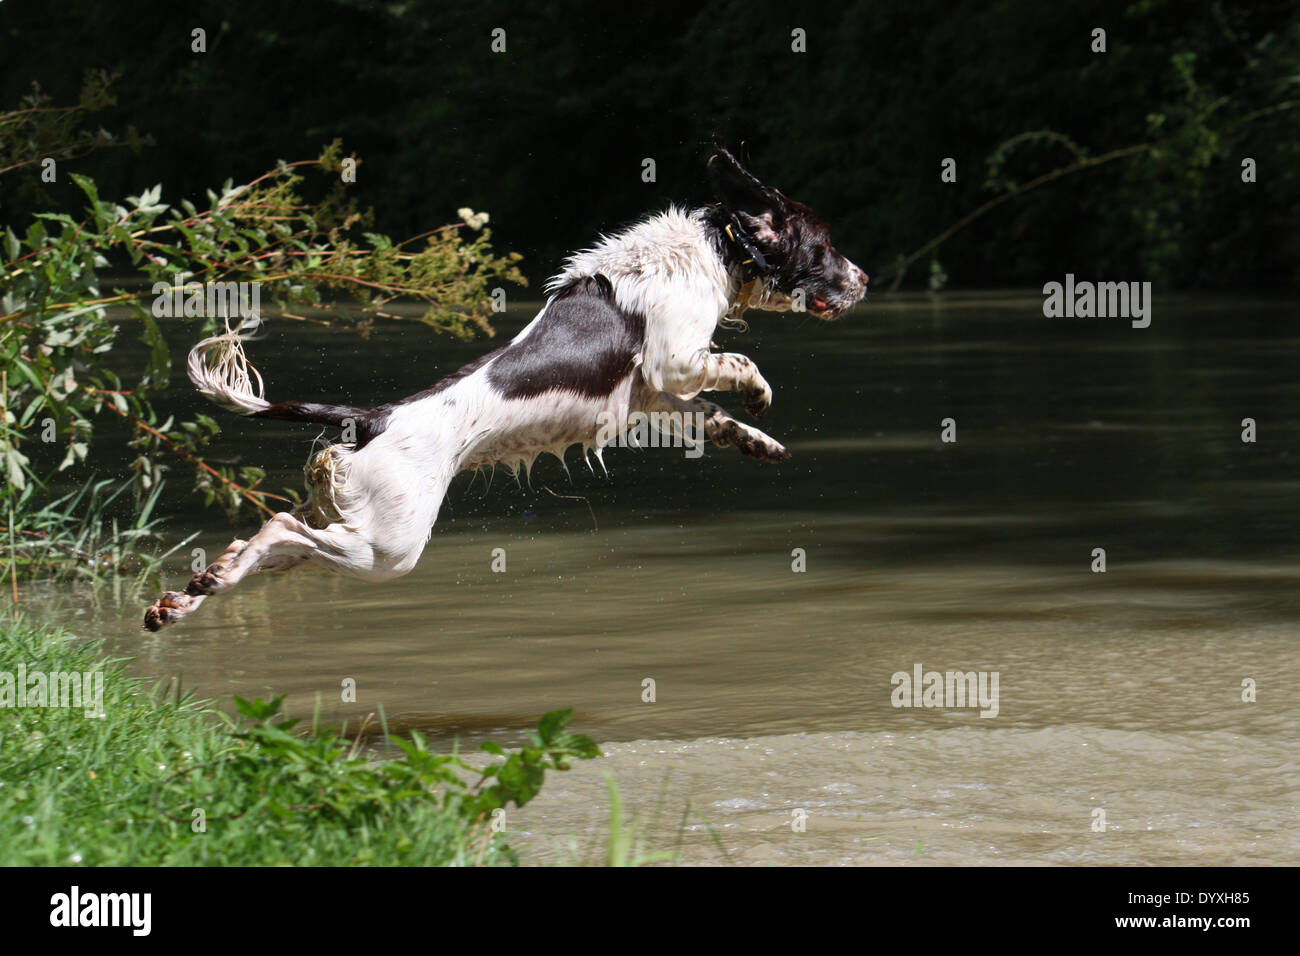 Working type english springer spaniel pet gundog running into water Stock Photo